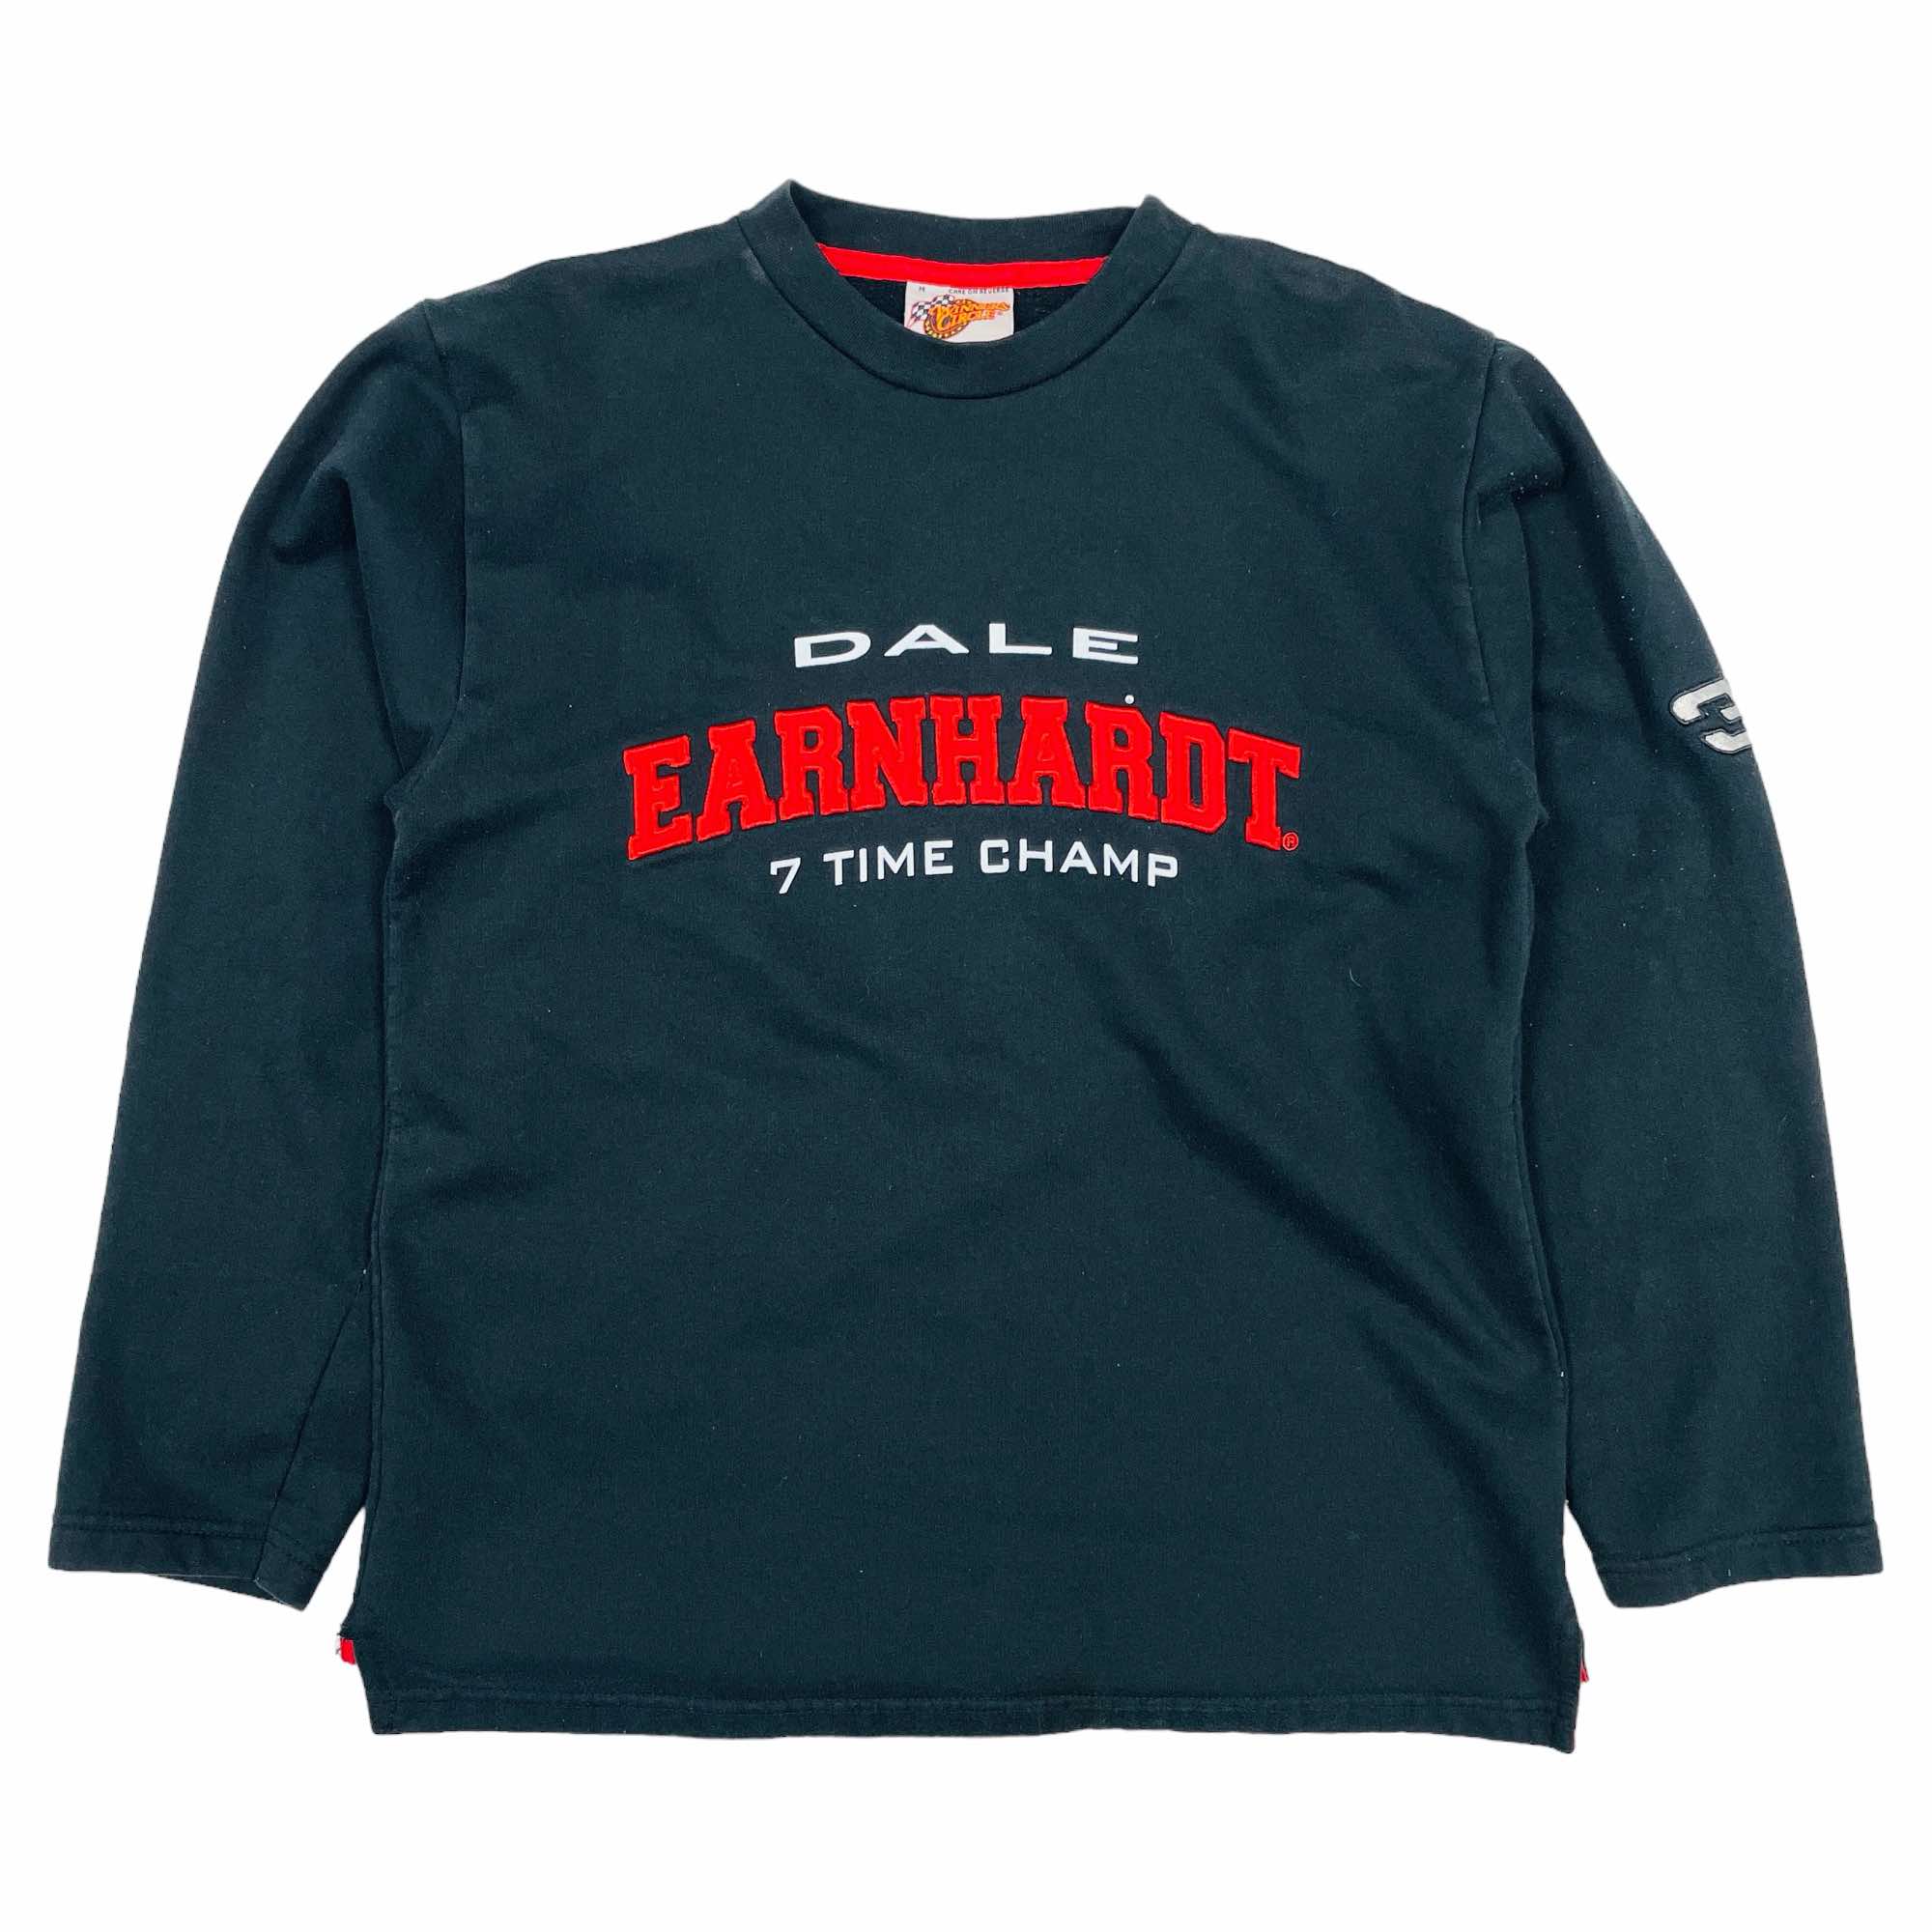 Dale Earnhardt Nascar Sweatshirt - Medium